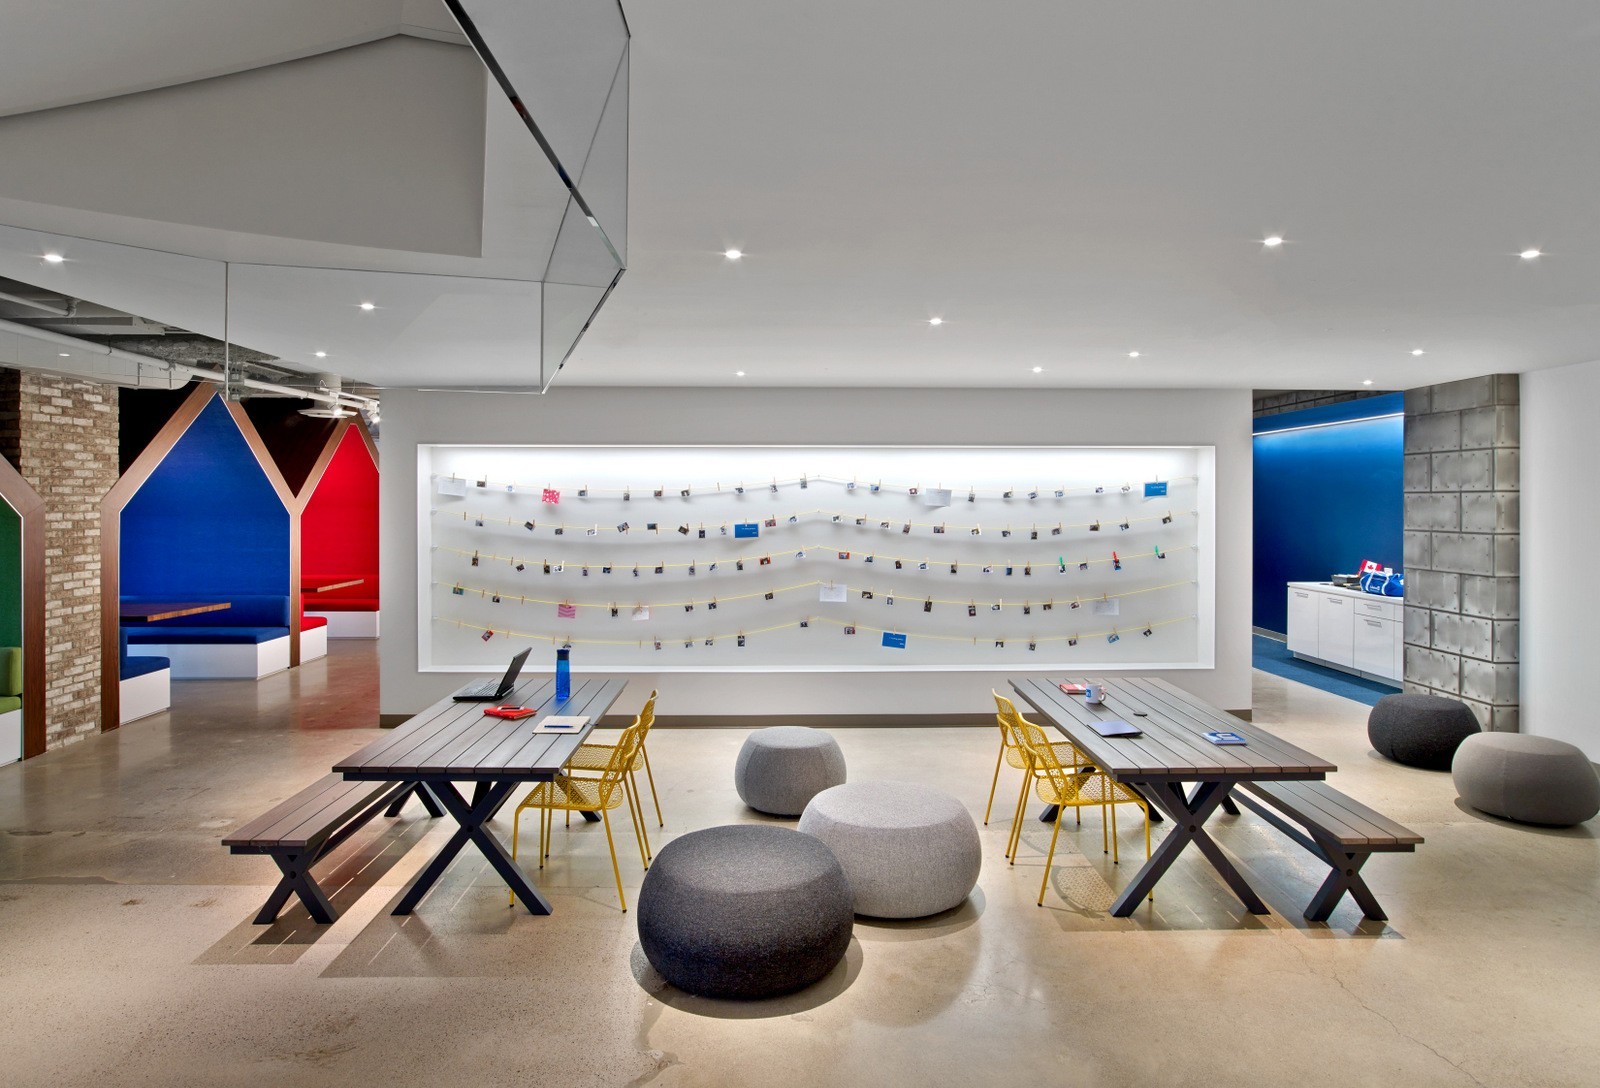 A Tour of LinkedIn’s Beautiful New Toronto Office